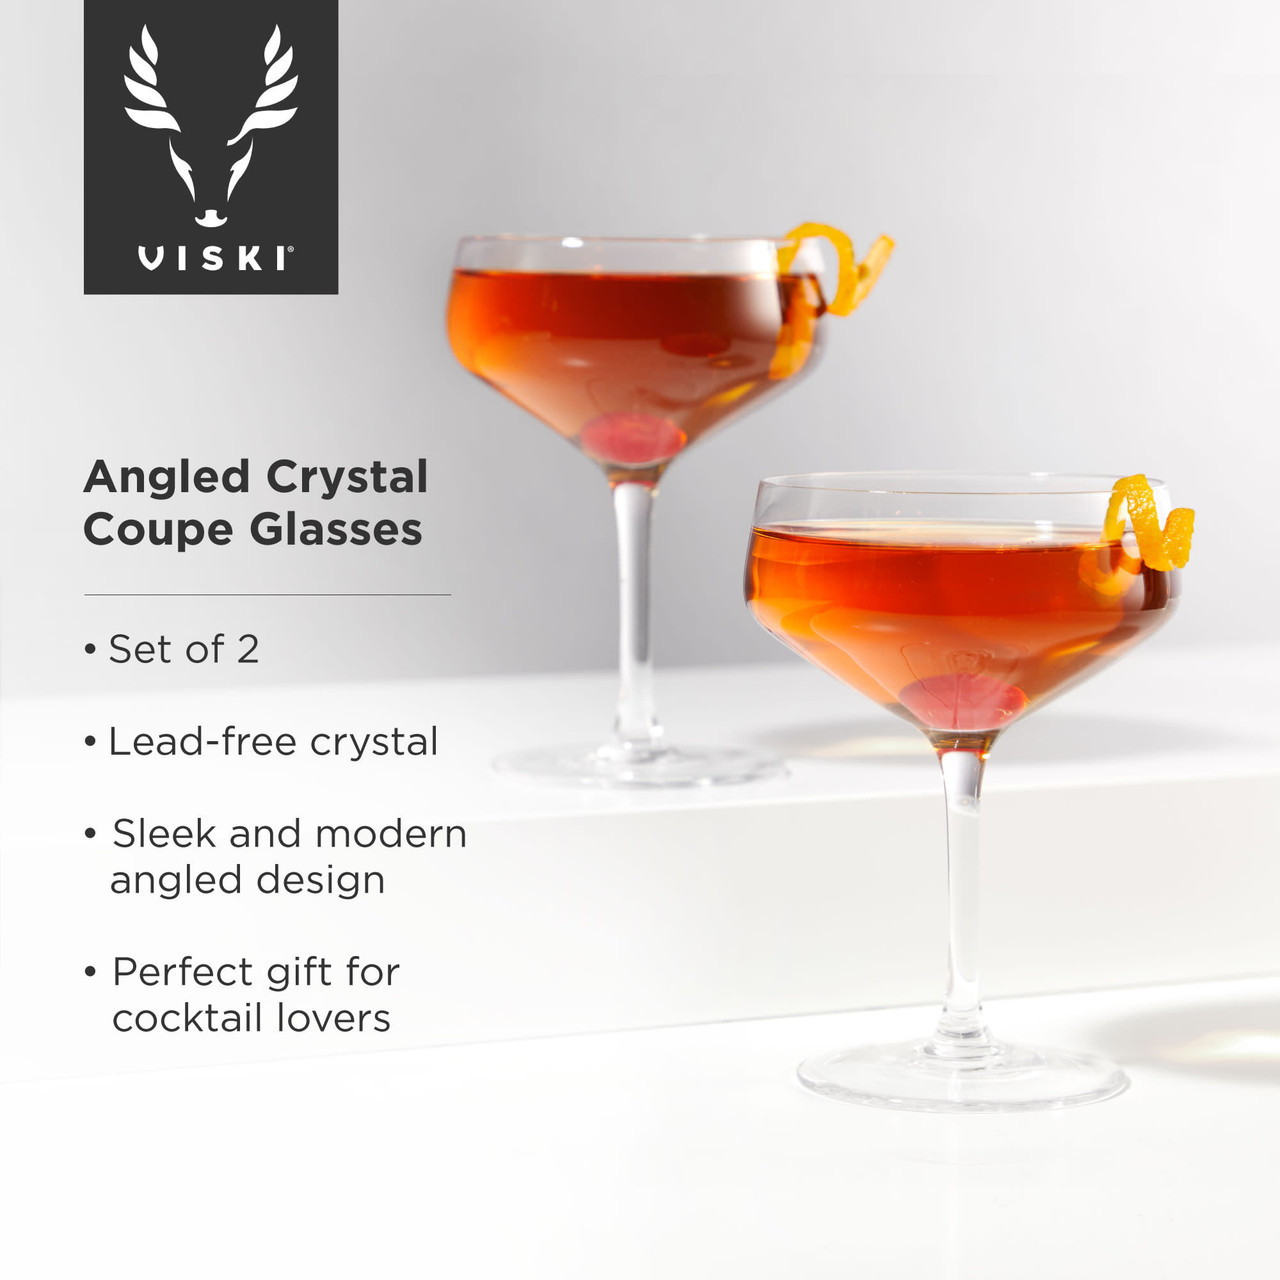 Angled Crystal Coupe Glasses by Viski®